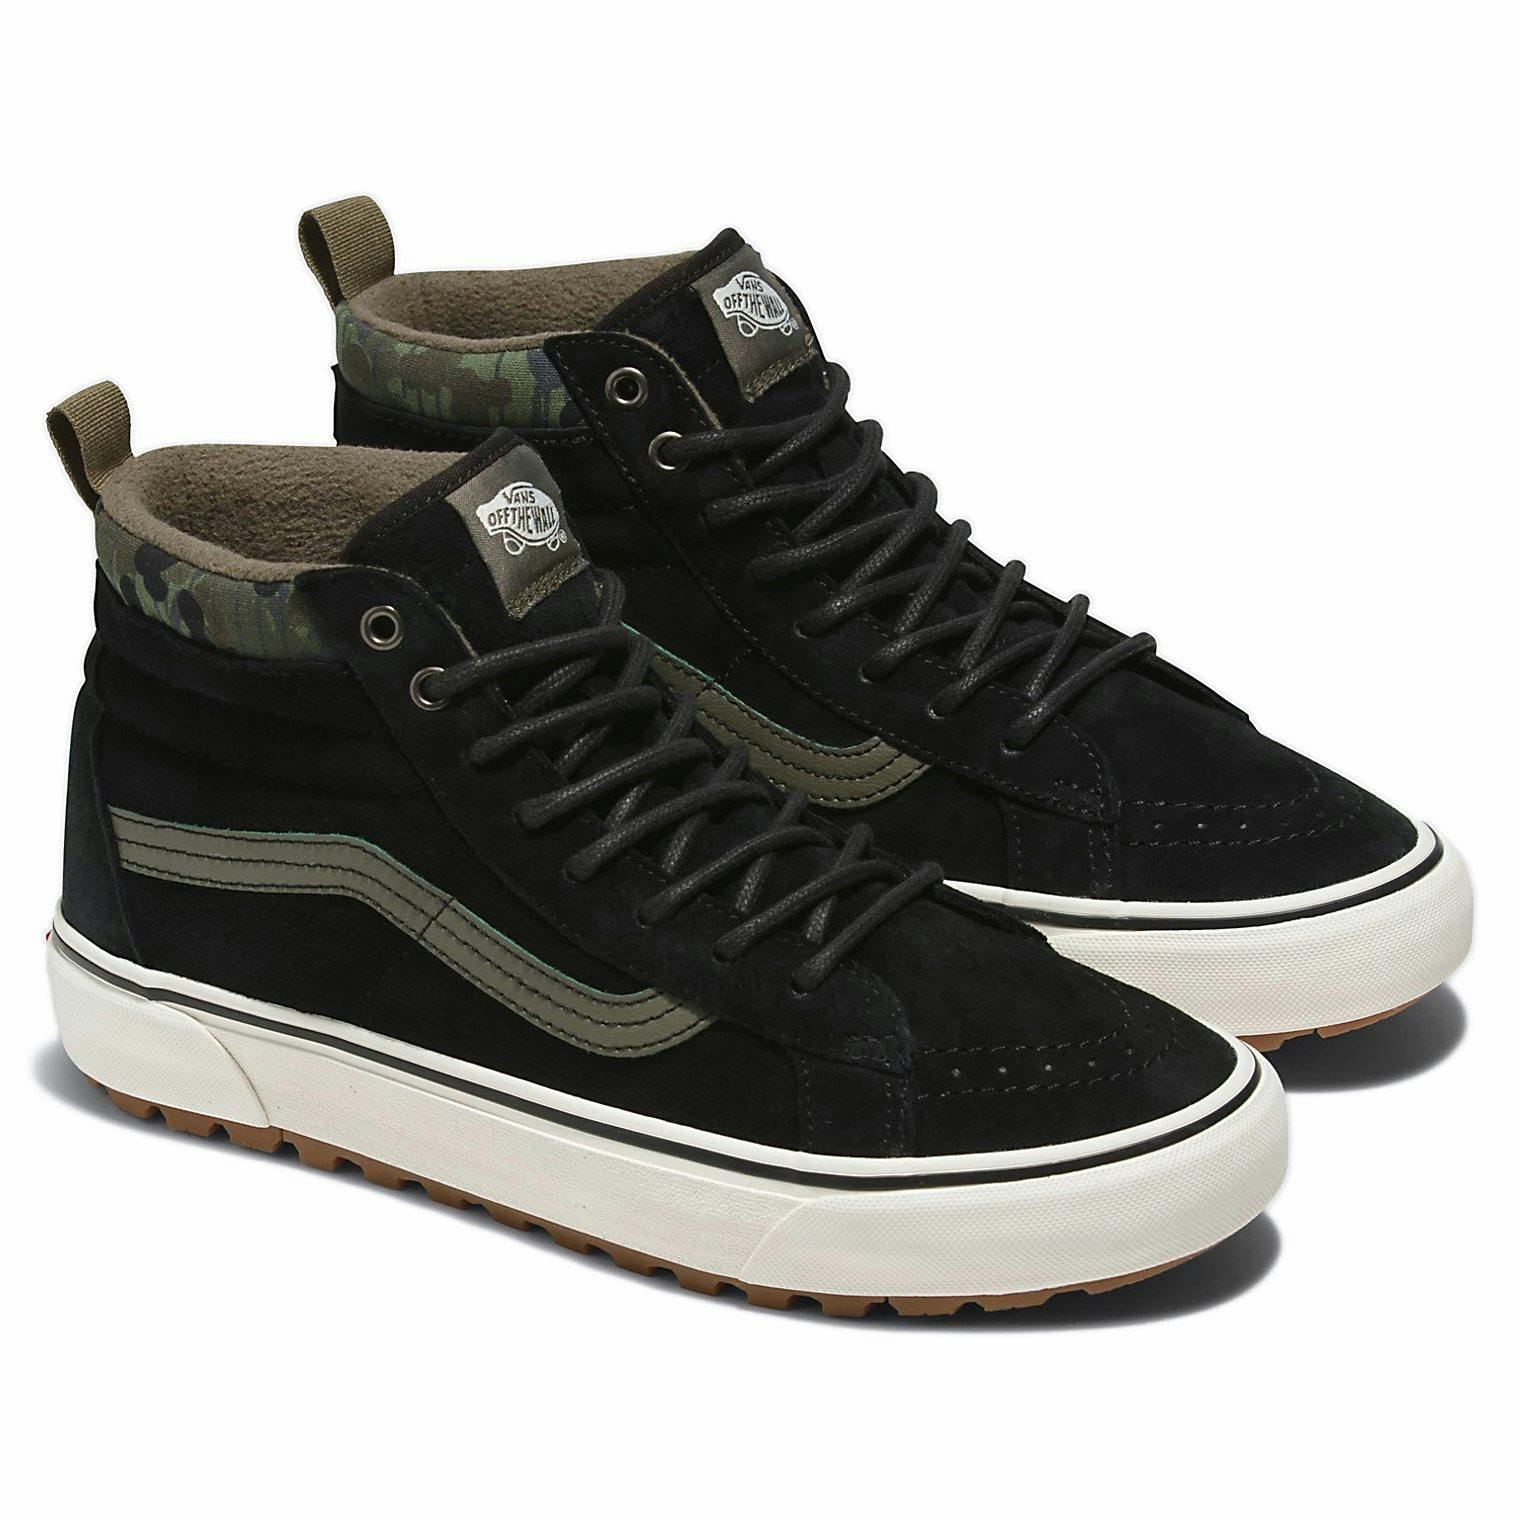 SK8-Hi Sneakers Black/Marshmellow - | Vans MTE-1 Sneaker Boot | Trail Huckberry